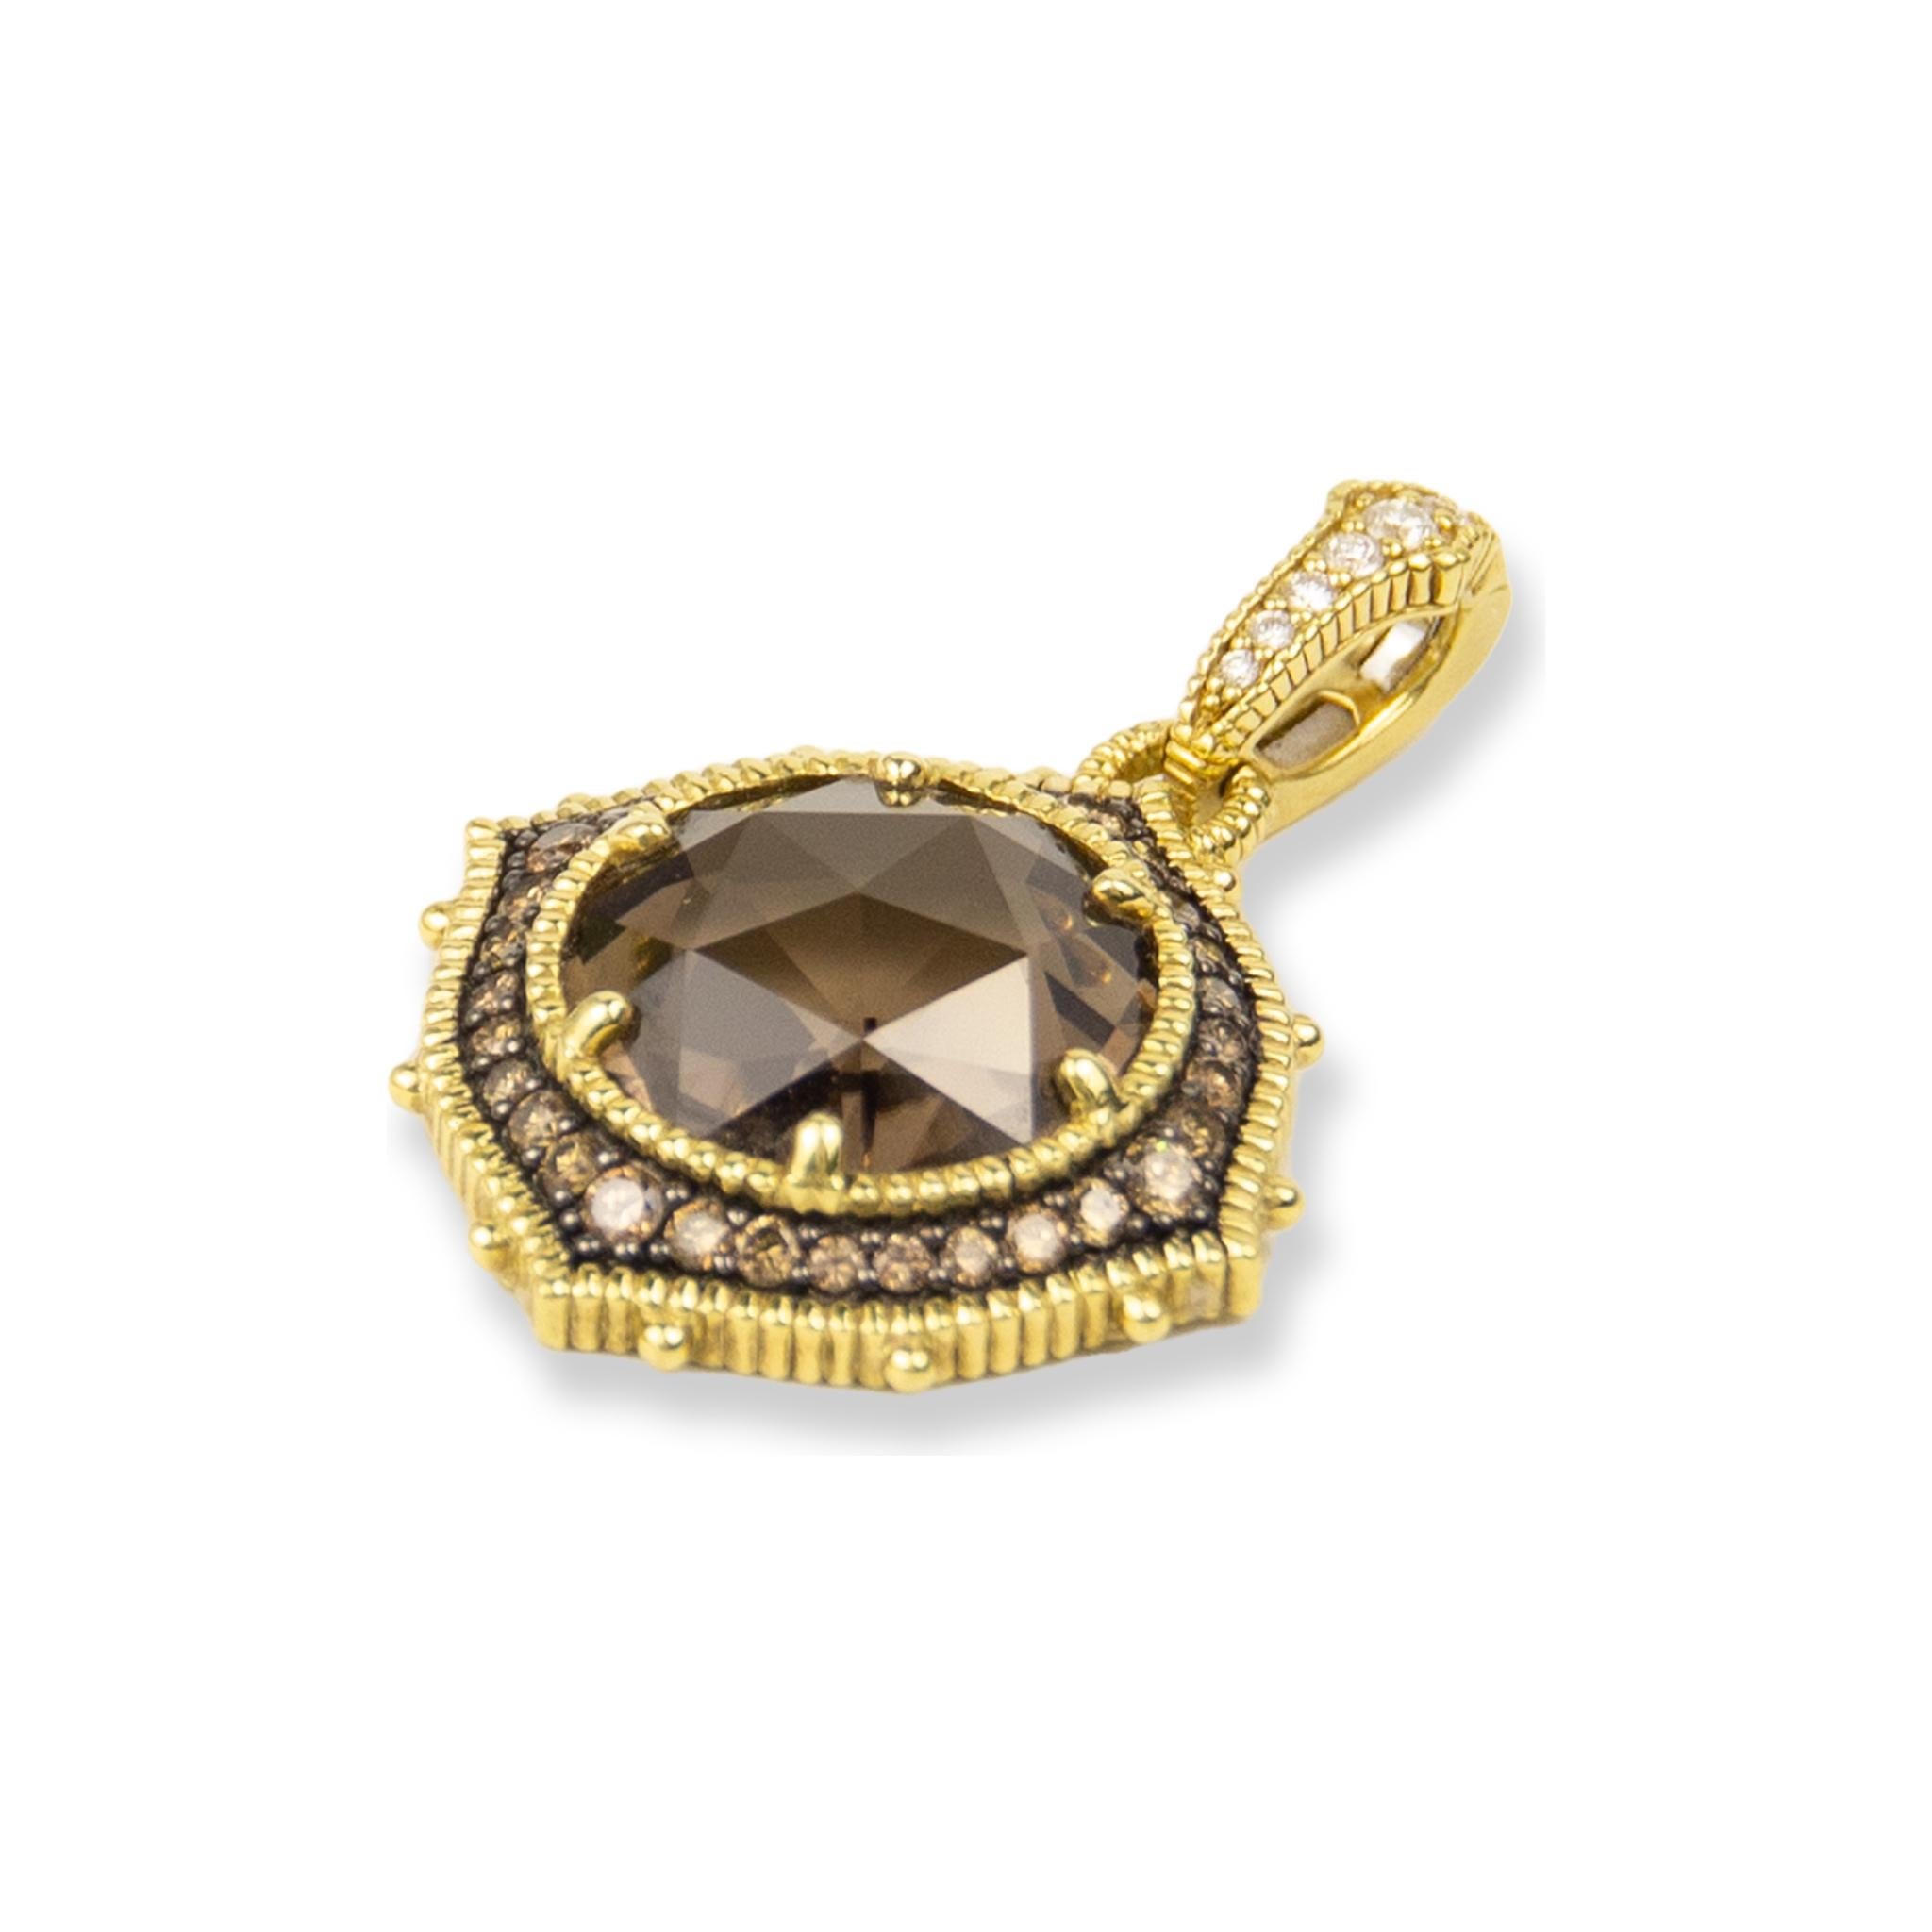 Judith Ripka 18K Yellow Gold Pendant
Blue Quartz: 7.75ctw 
Diamonds: 0.99ctw
SKU: JR01032
Retail price: $5,760.00